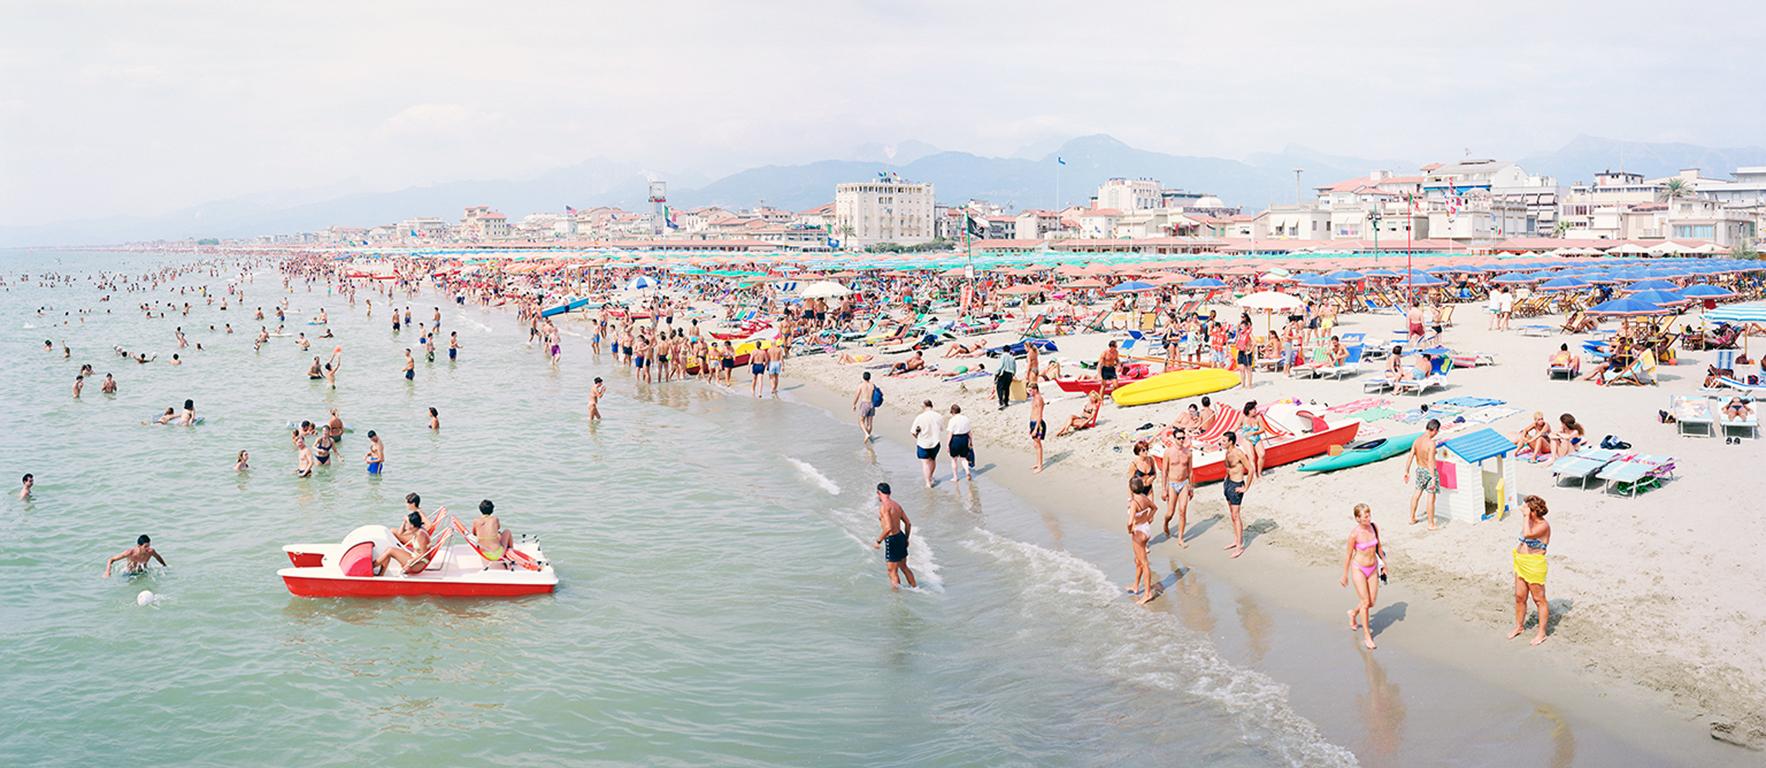 Viareggio Pano (framed) - unique panoramic photograph of Mediterranean beach 